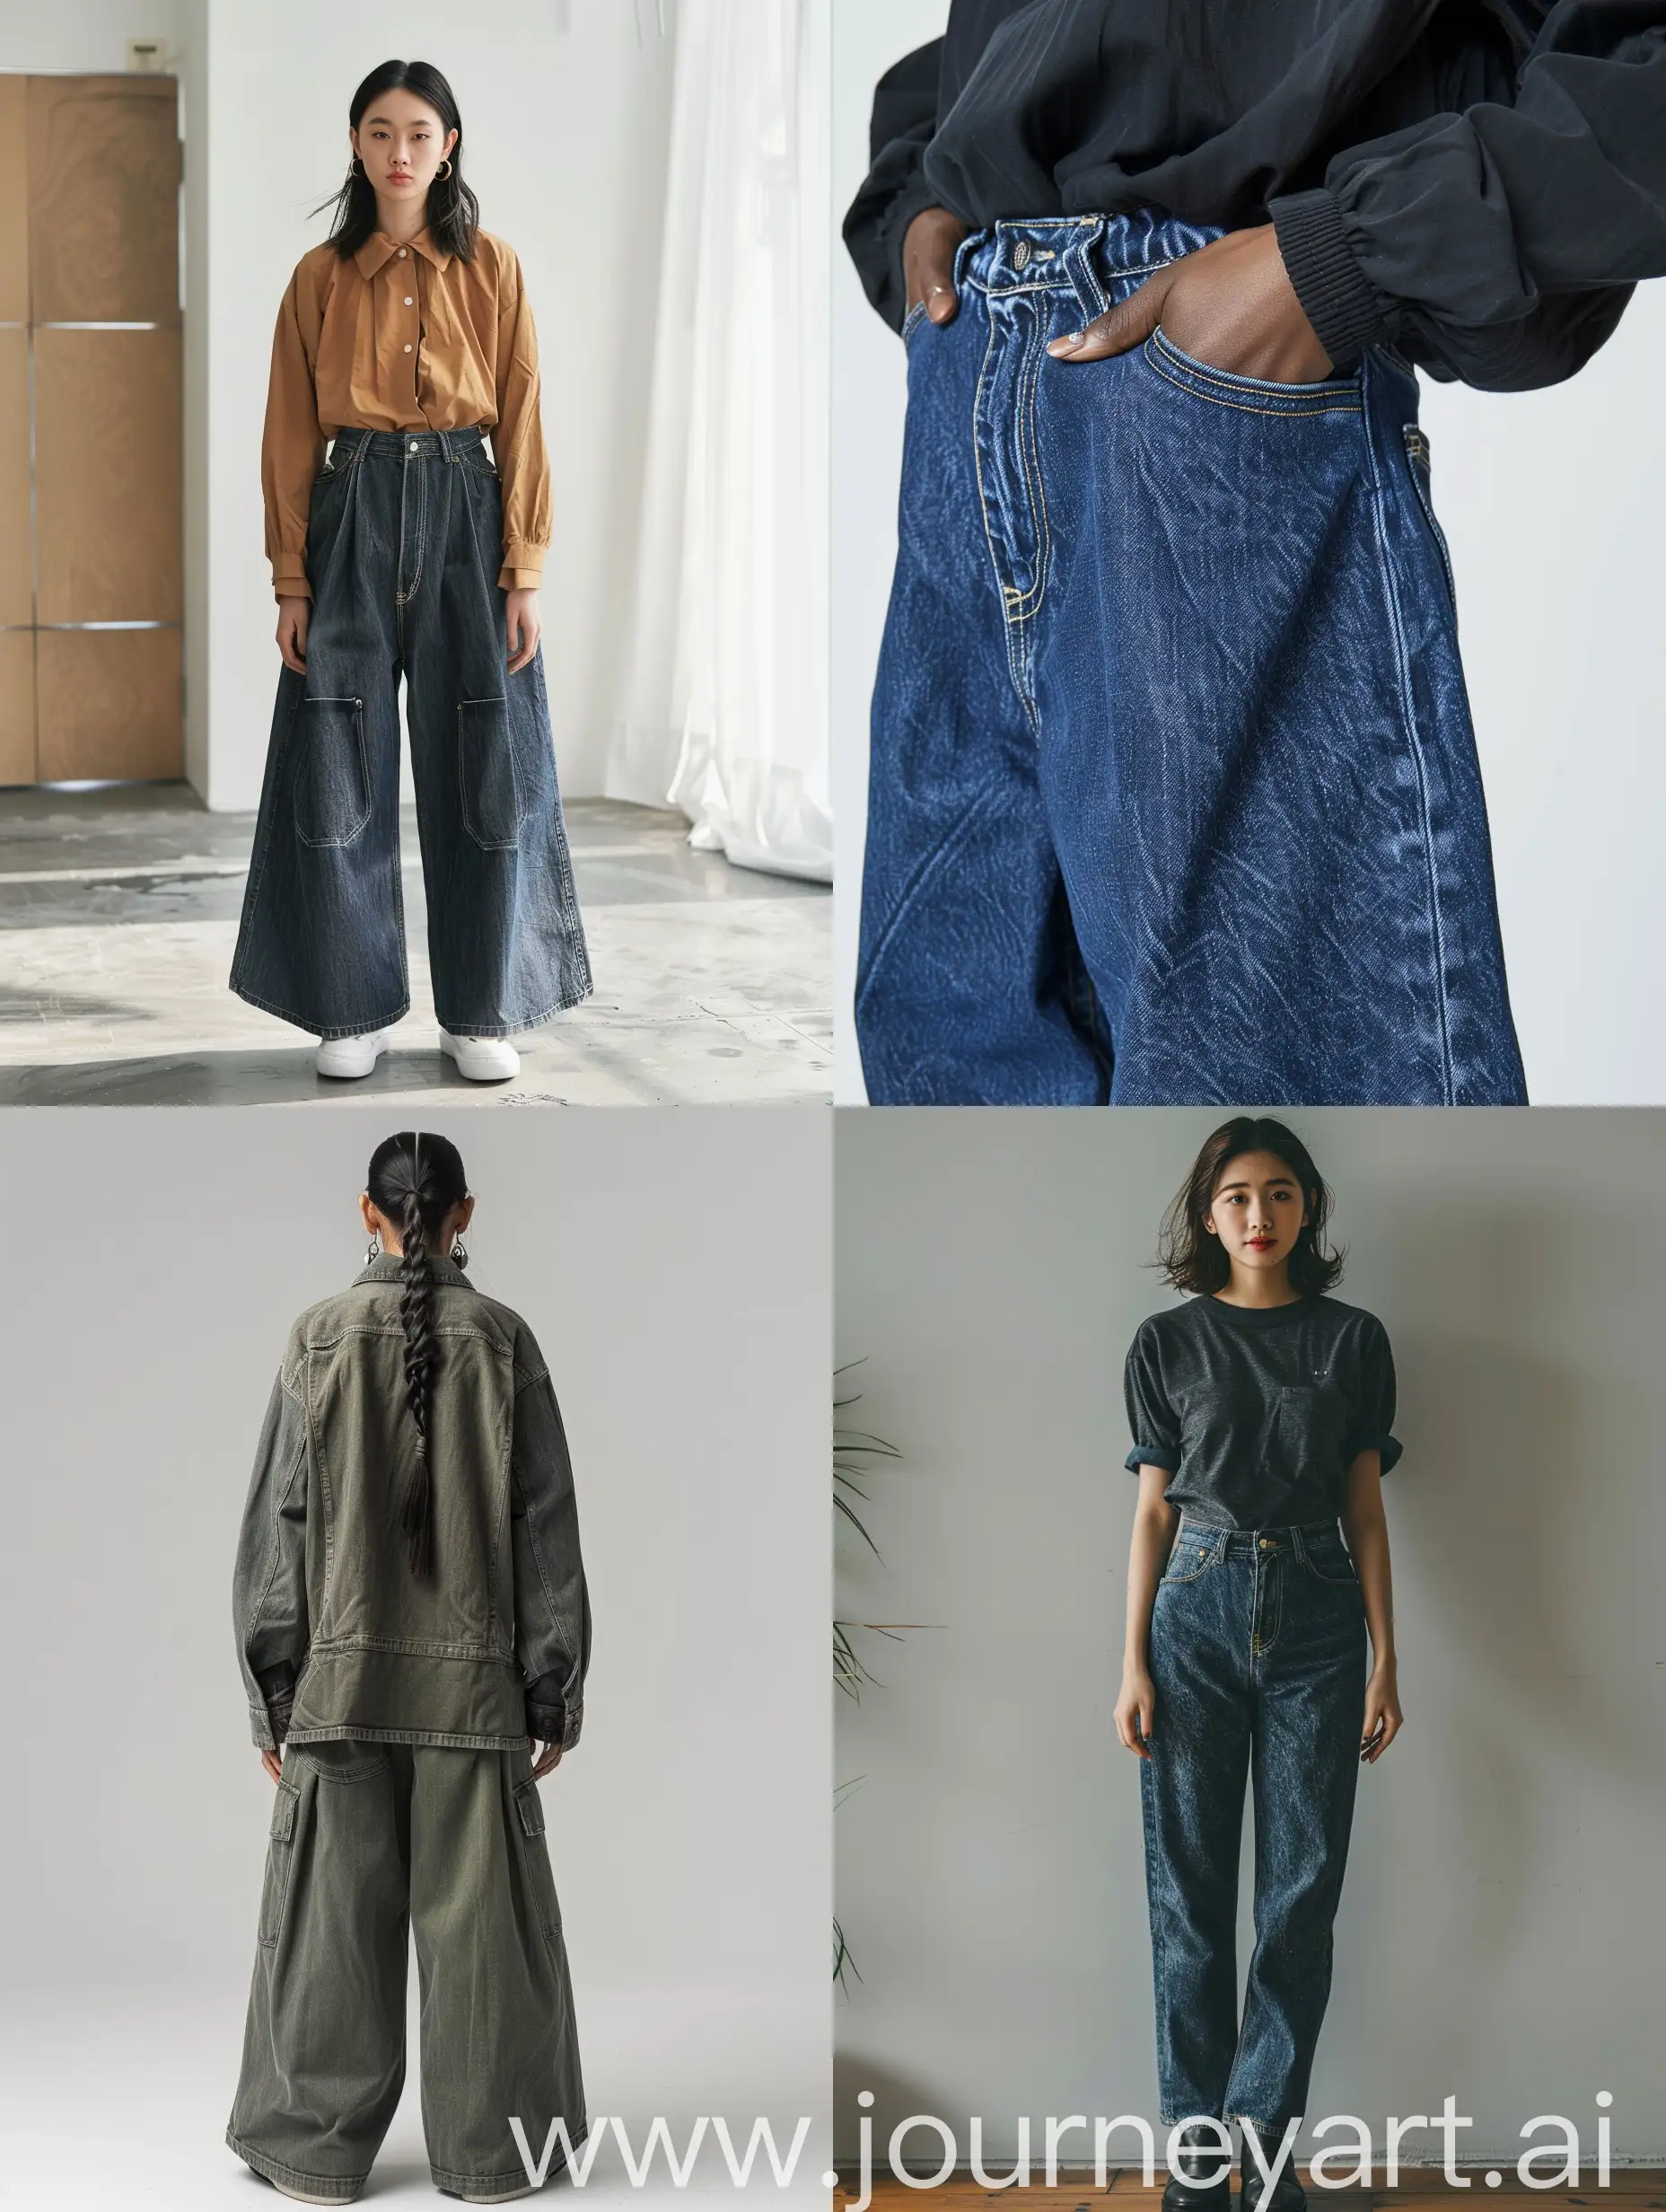 Tong-Liya-Wearing-Stylish-Jeans-in-Urban-Setting